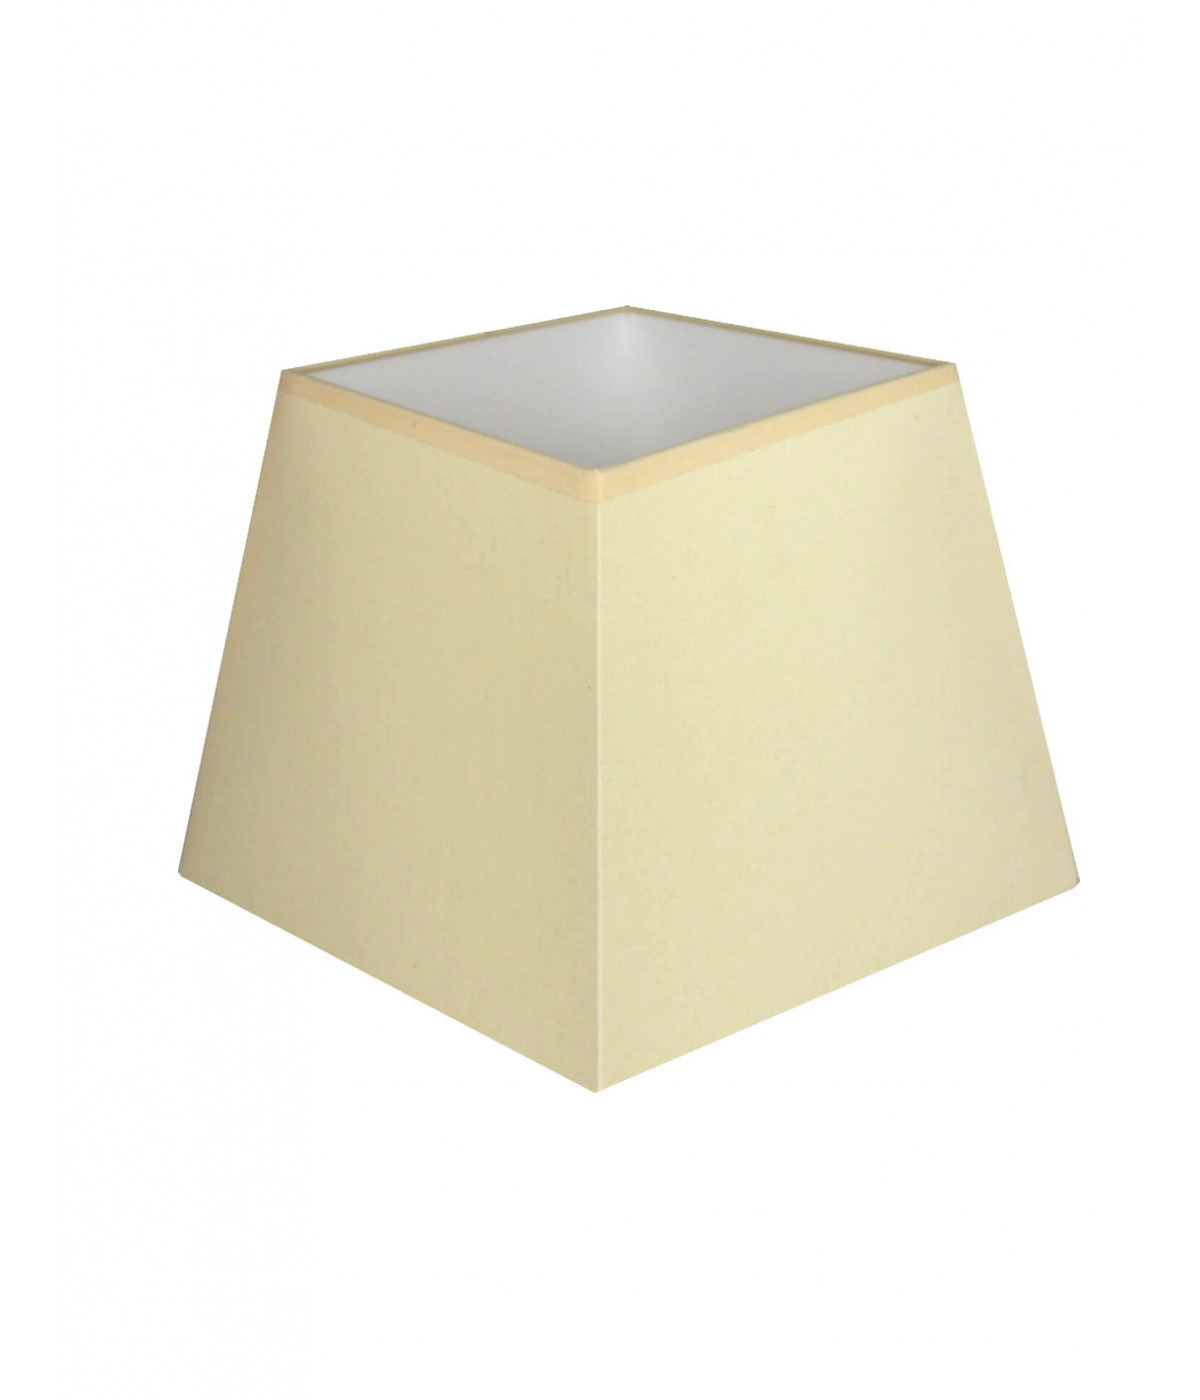 Beige square pyramidal lampshade